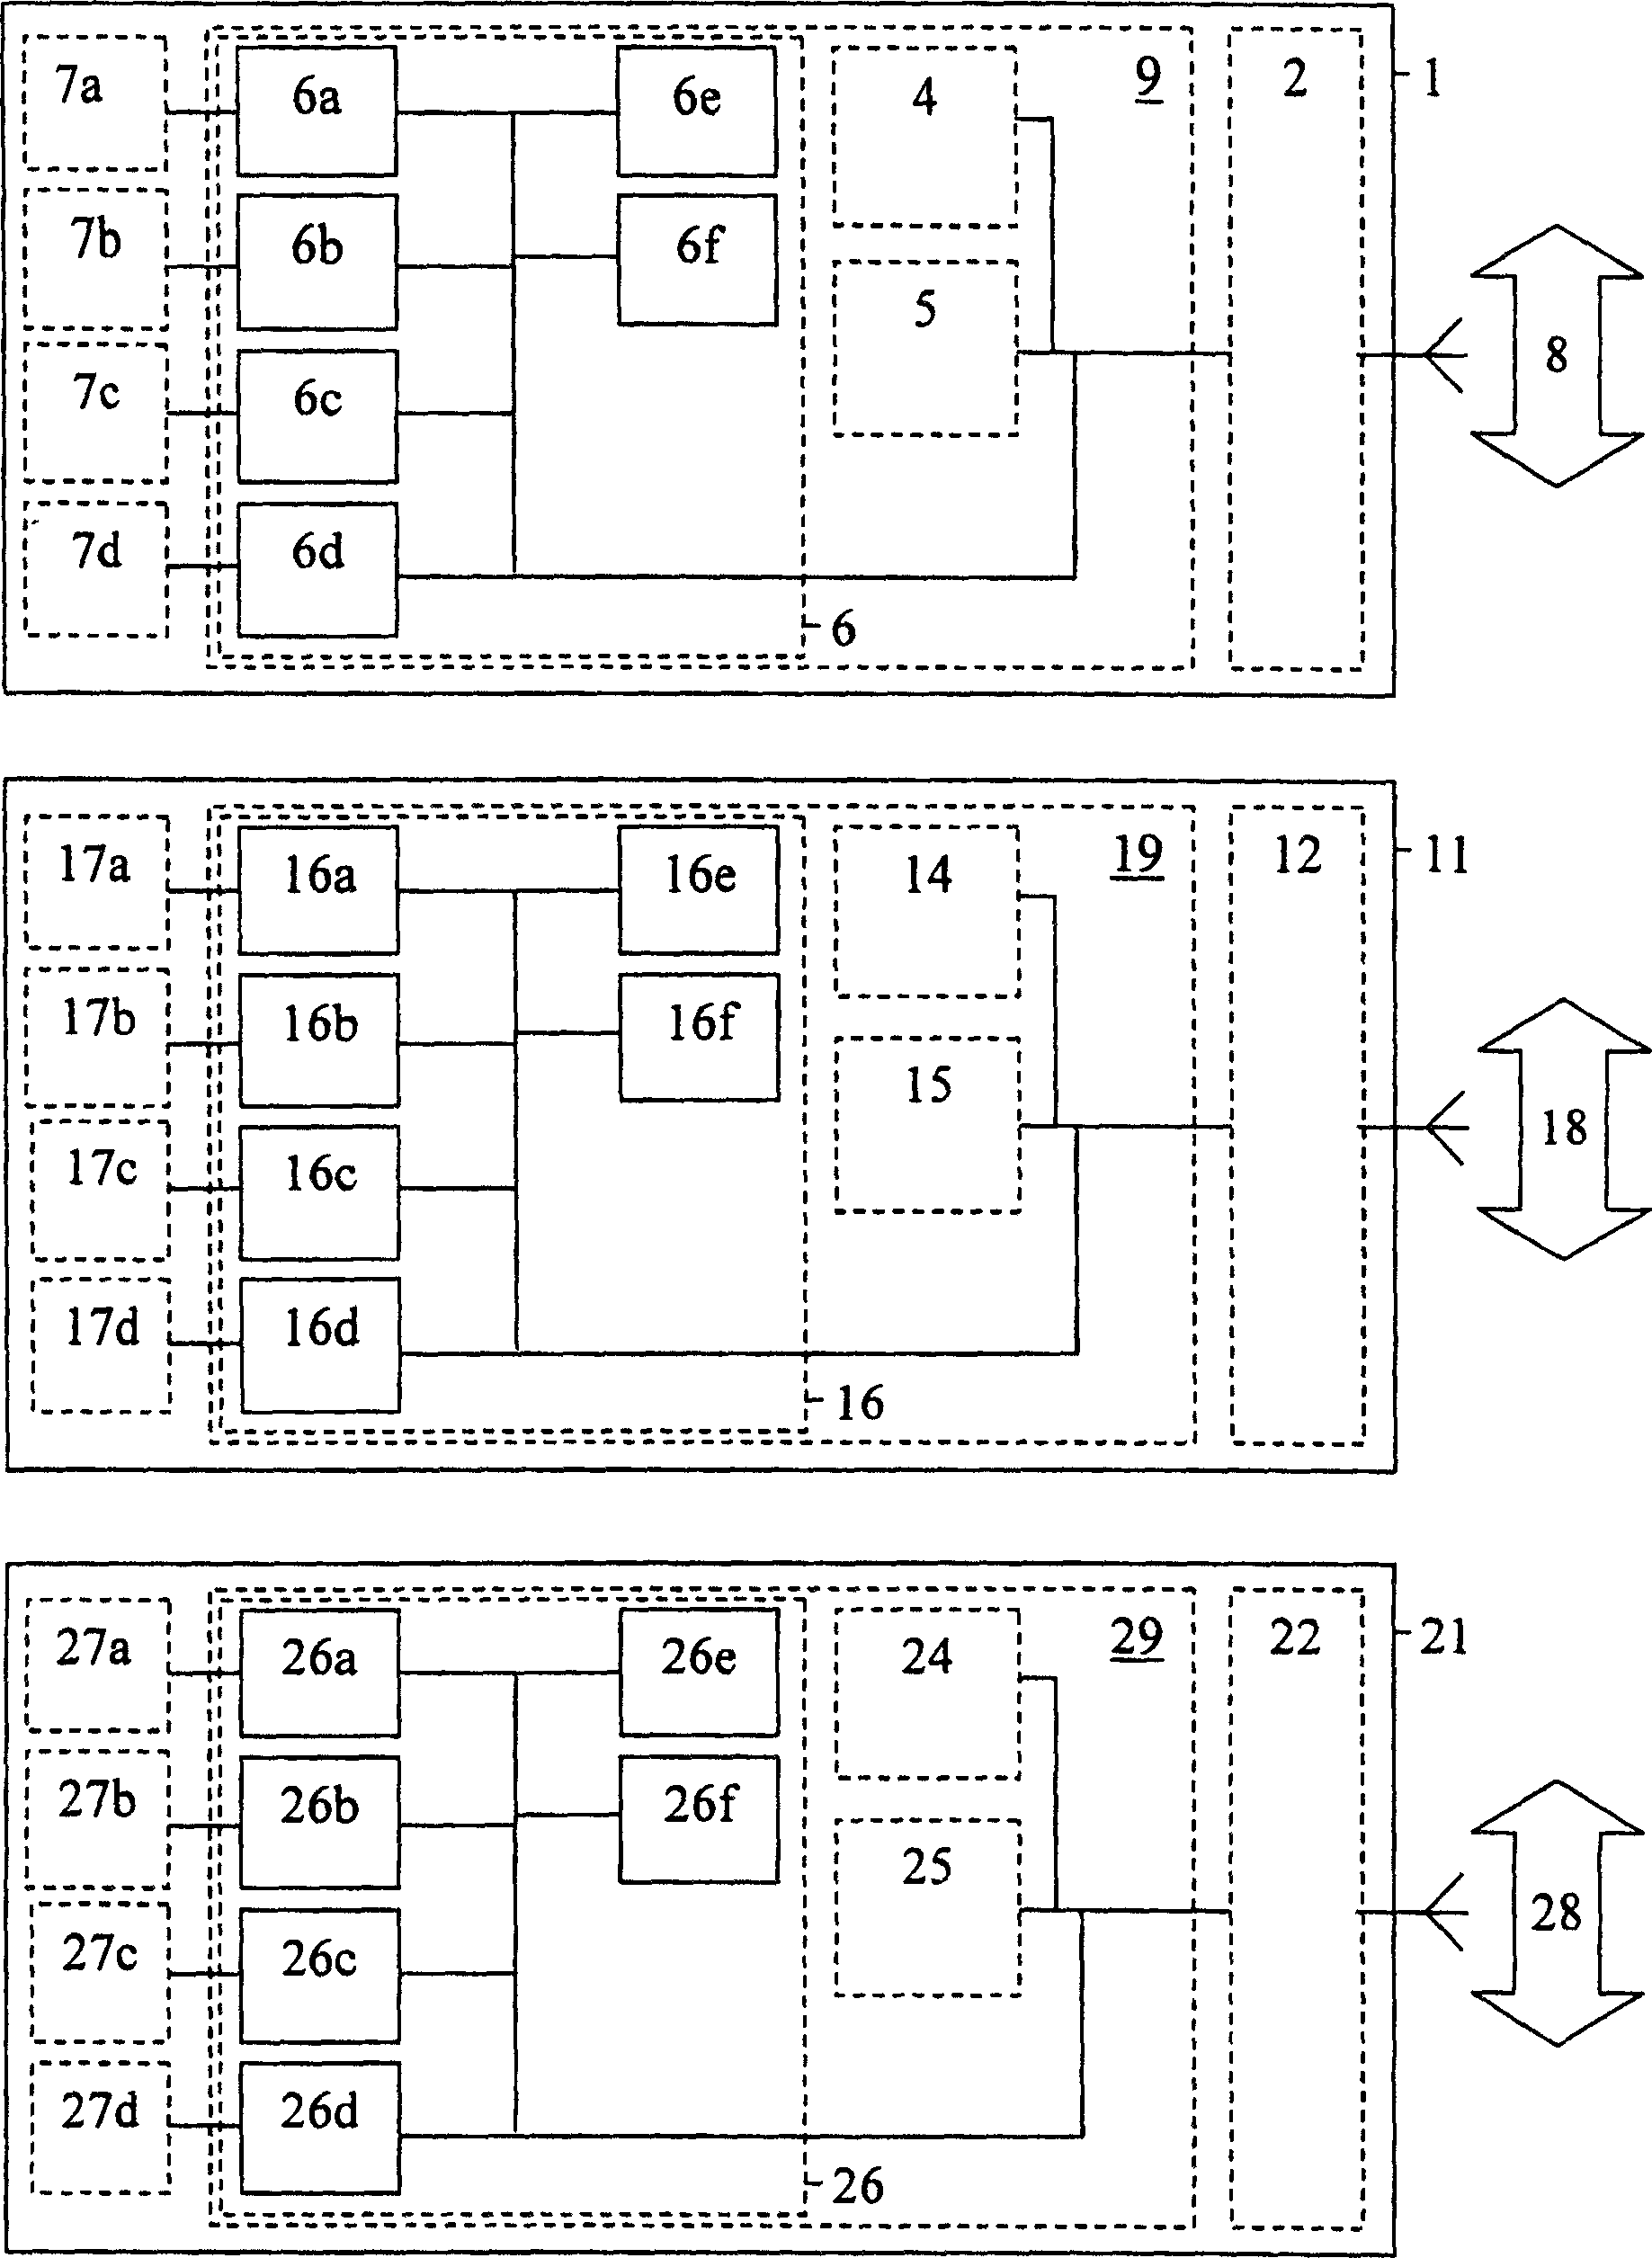 Terminal comprising a transceiver